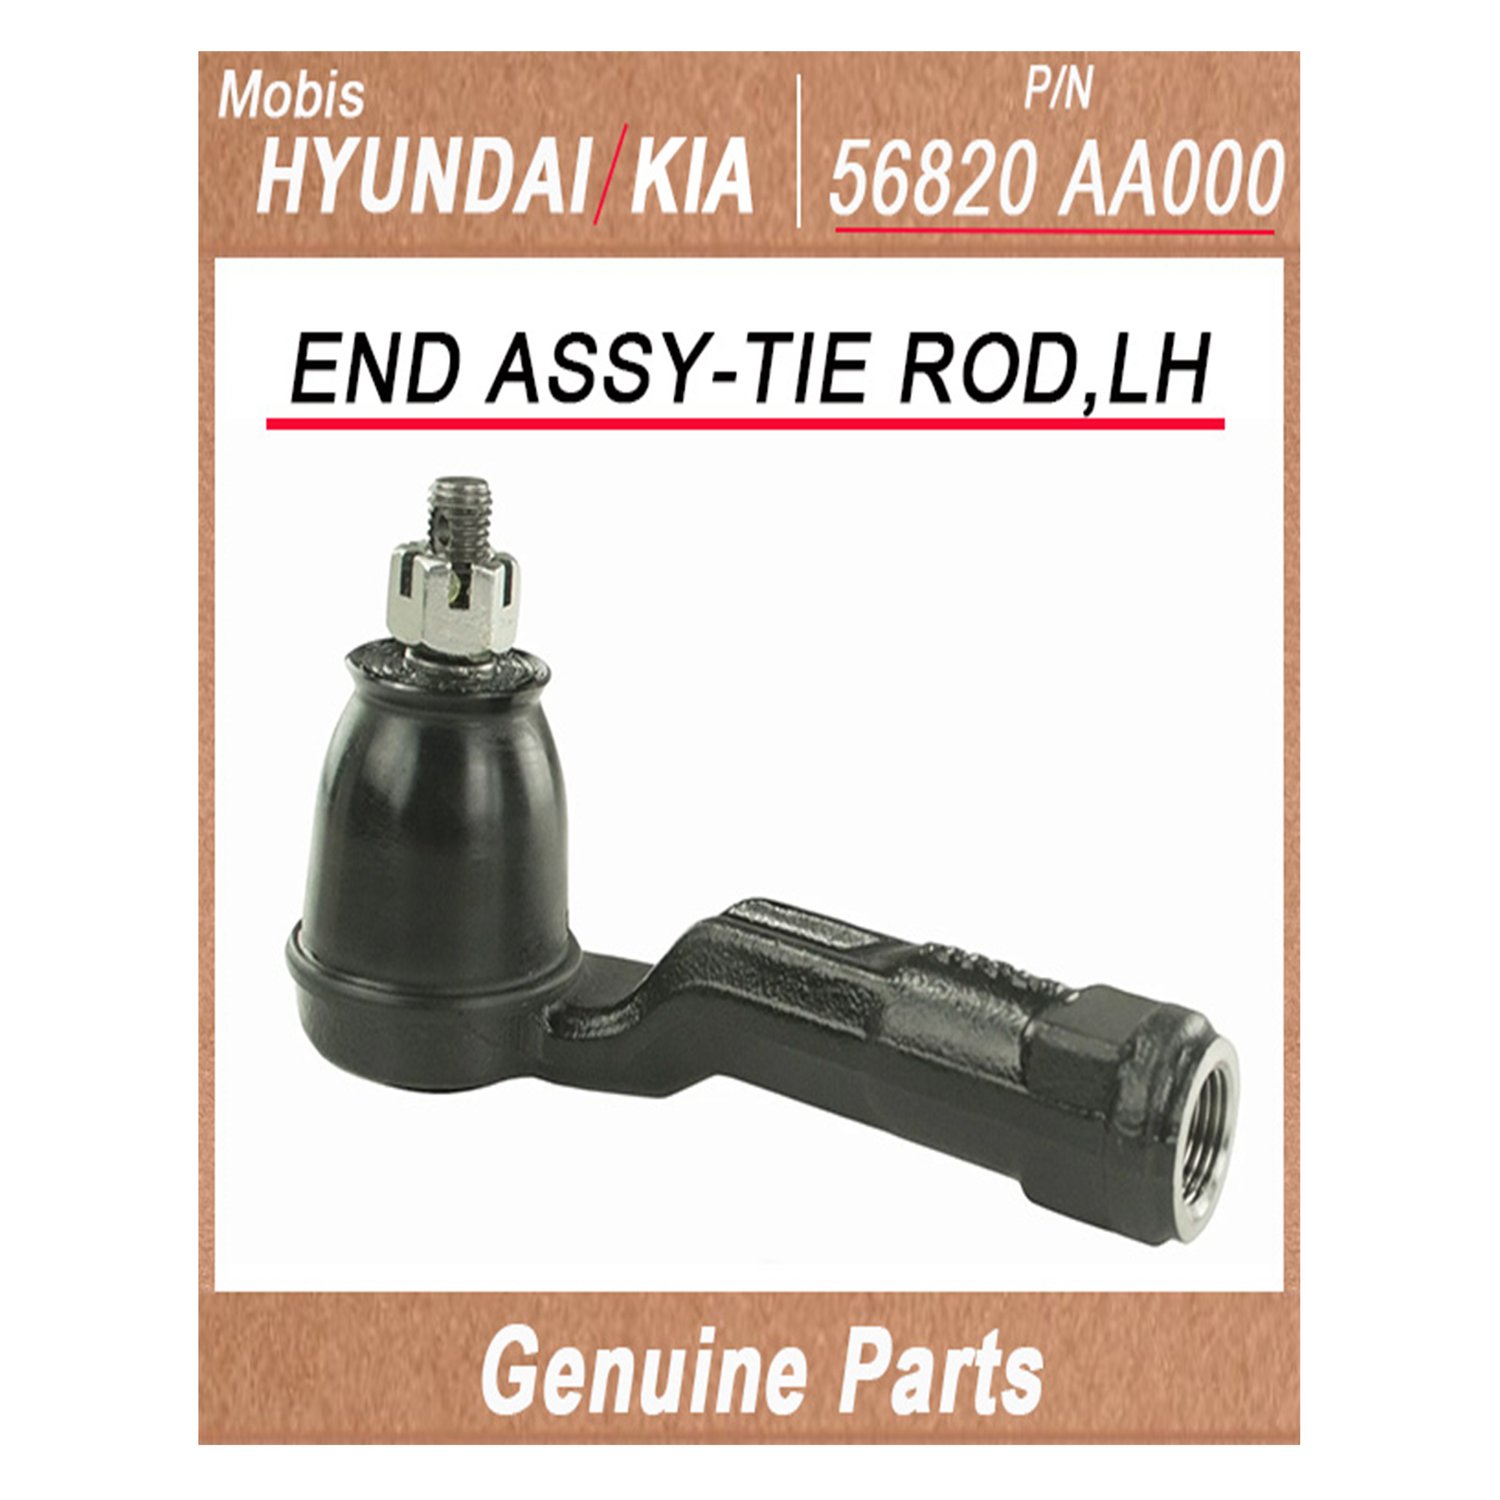 56820AA000 _ END ASSY_TIE ROD_LH _ Genuine Korean Automotive Spare Parts _ Hyundai Kia _Mobis_